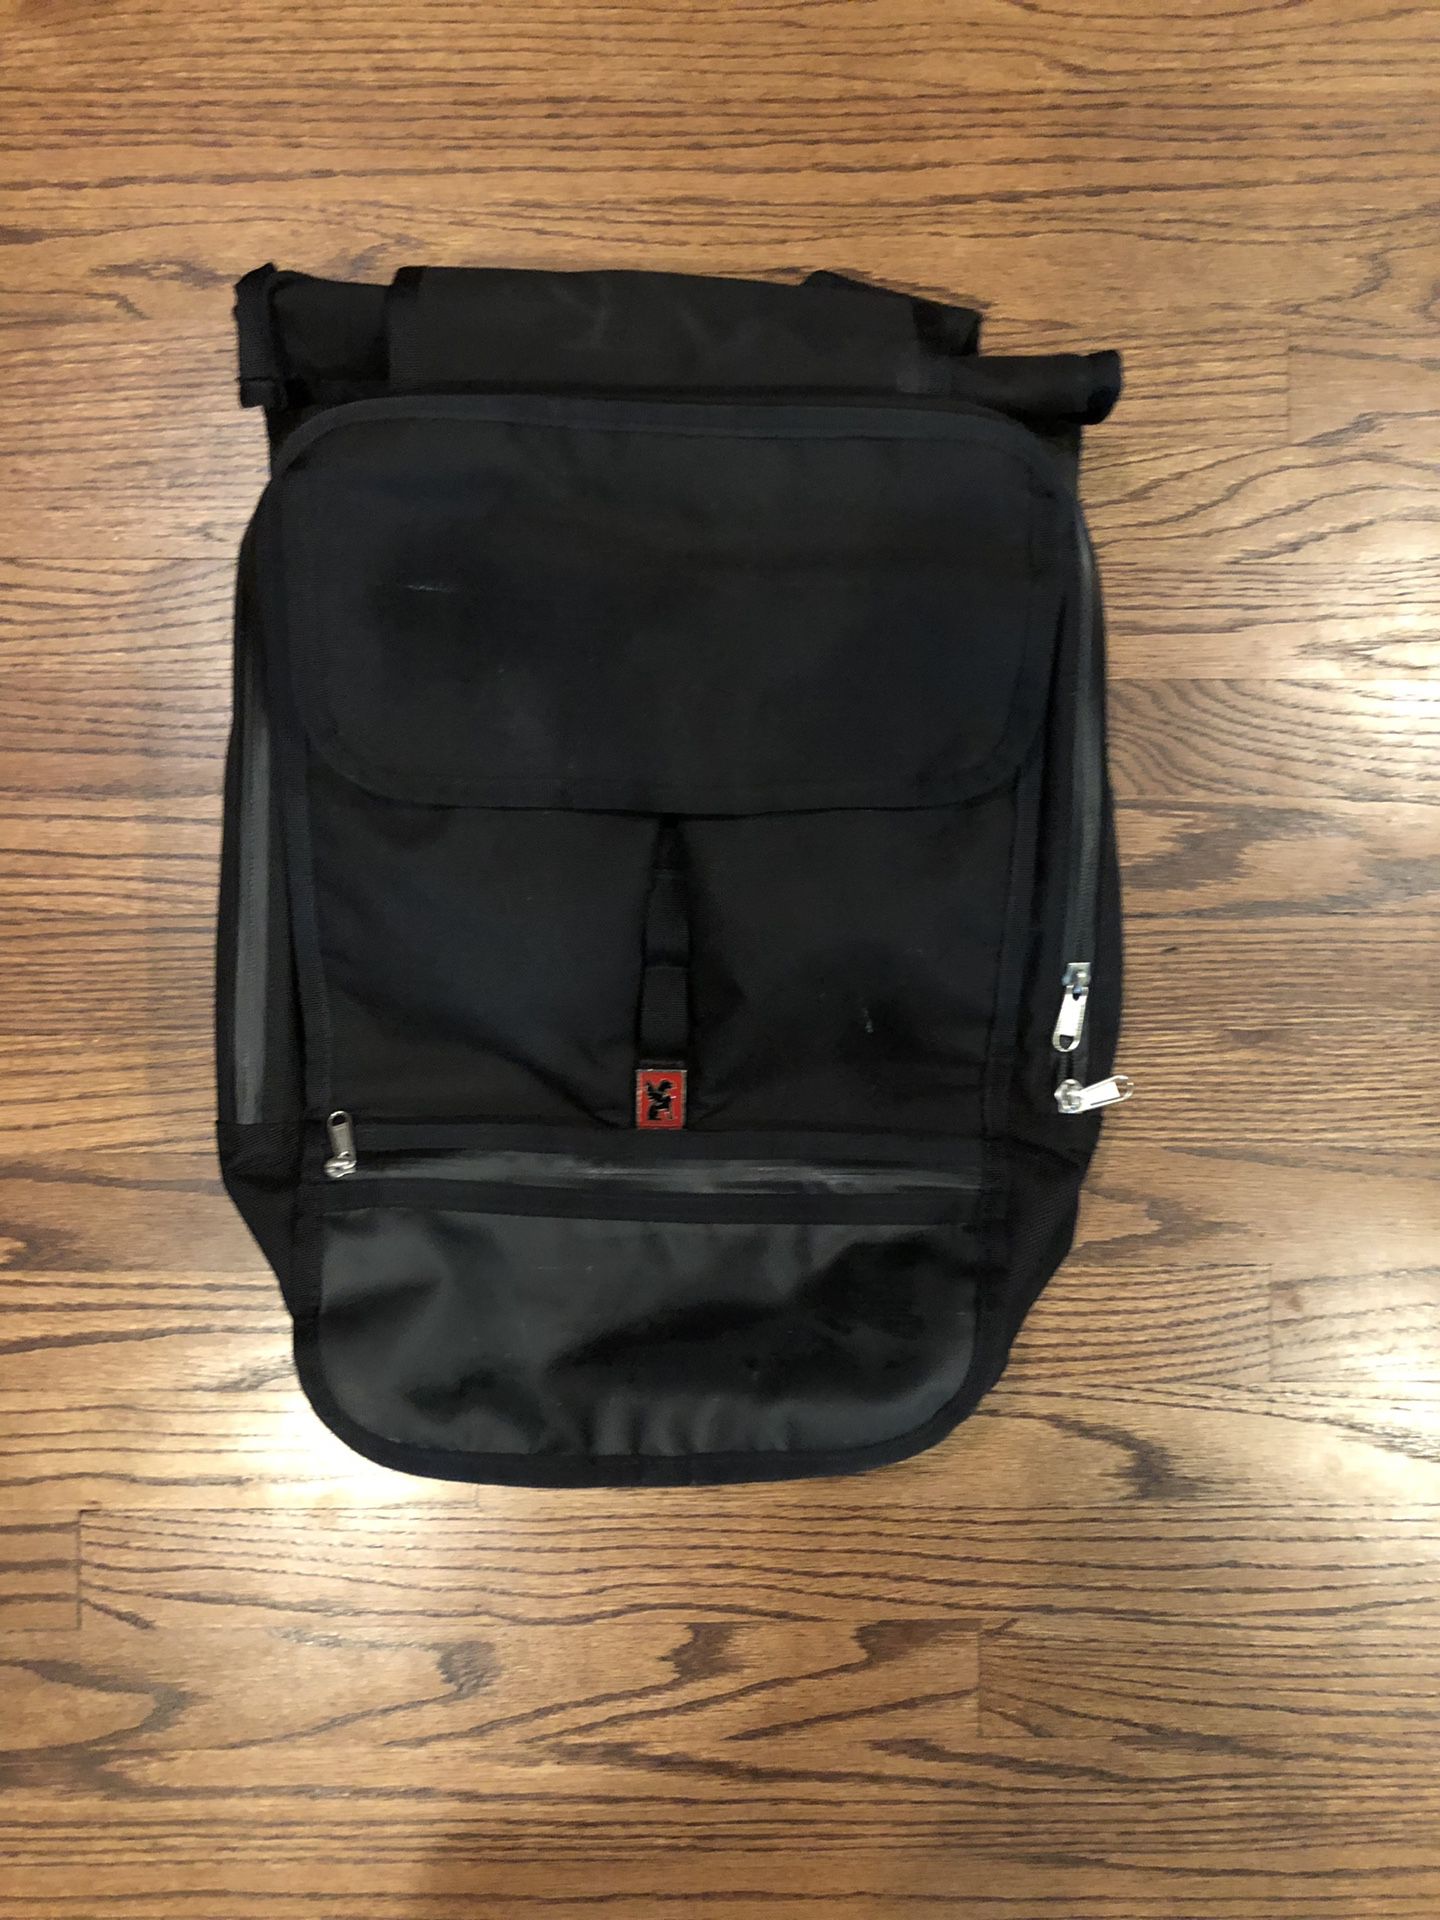 Chrome citadel laptop/backpack